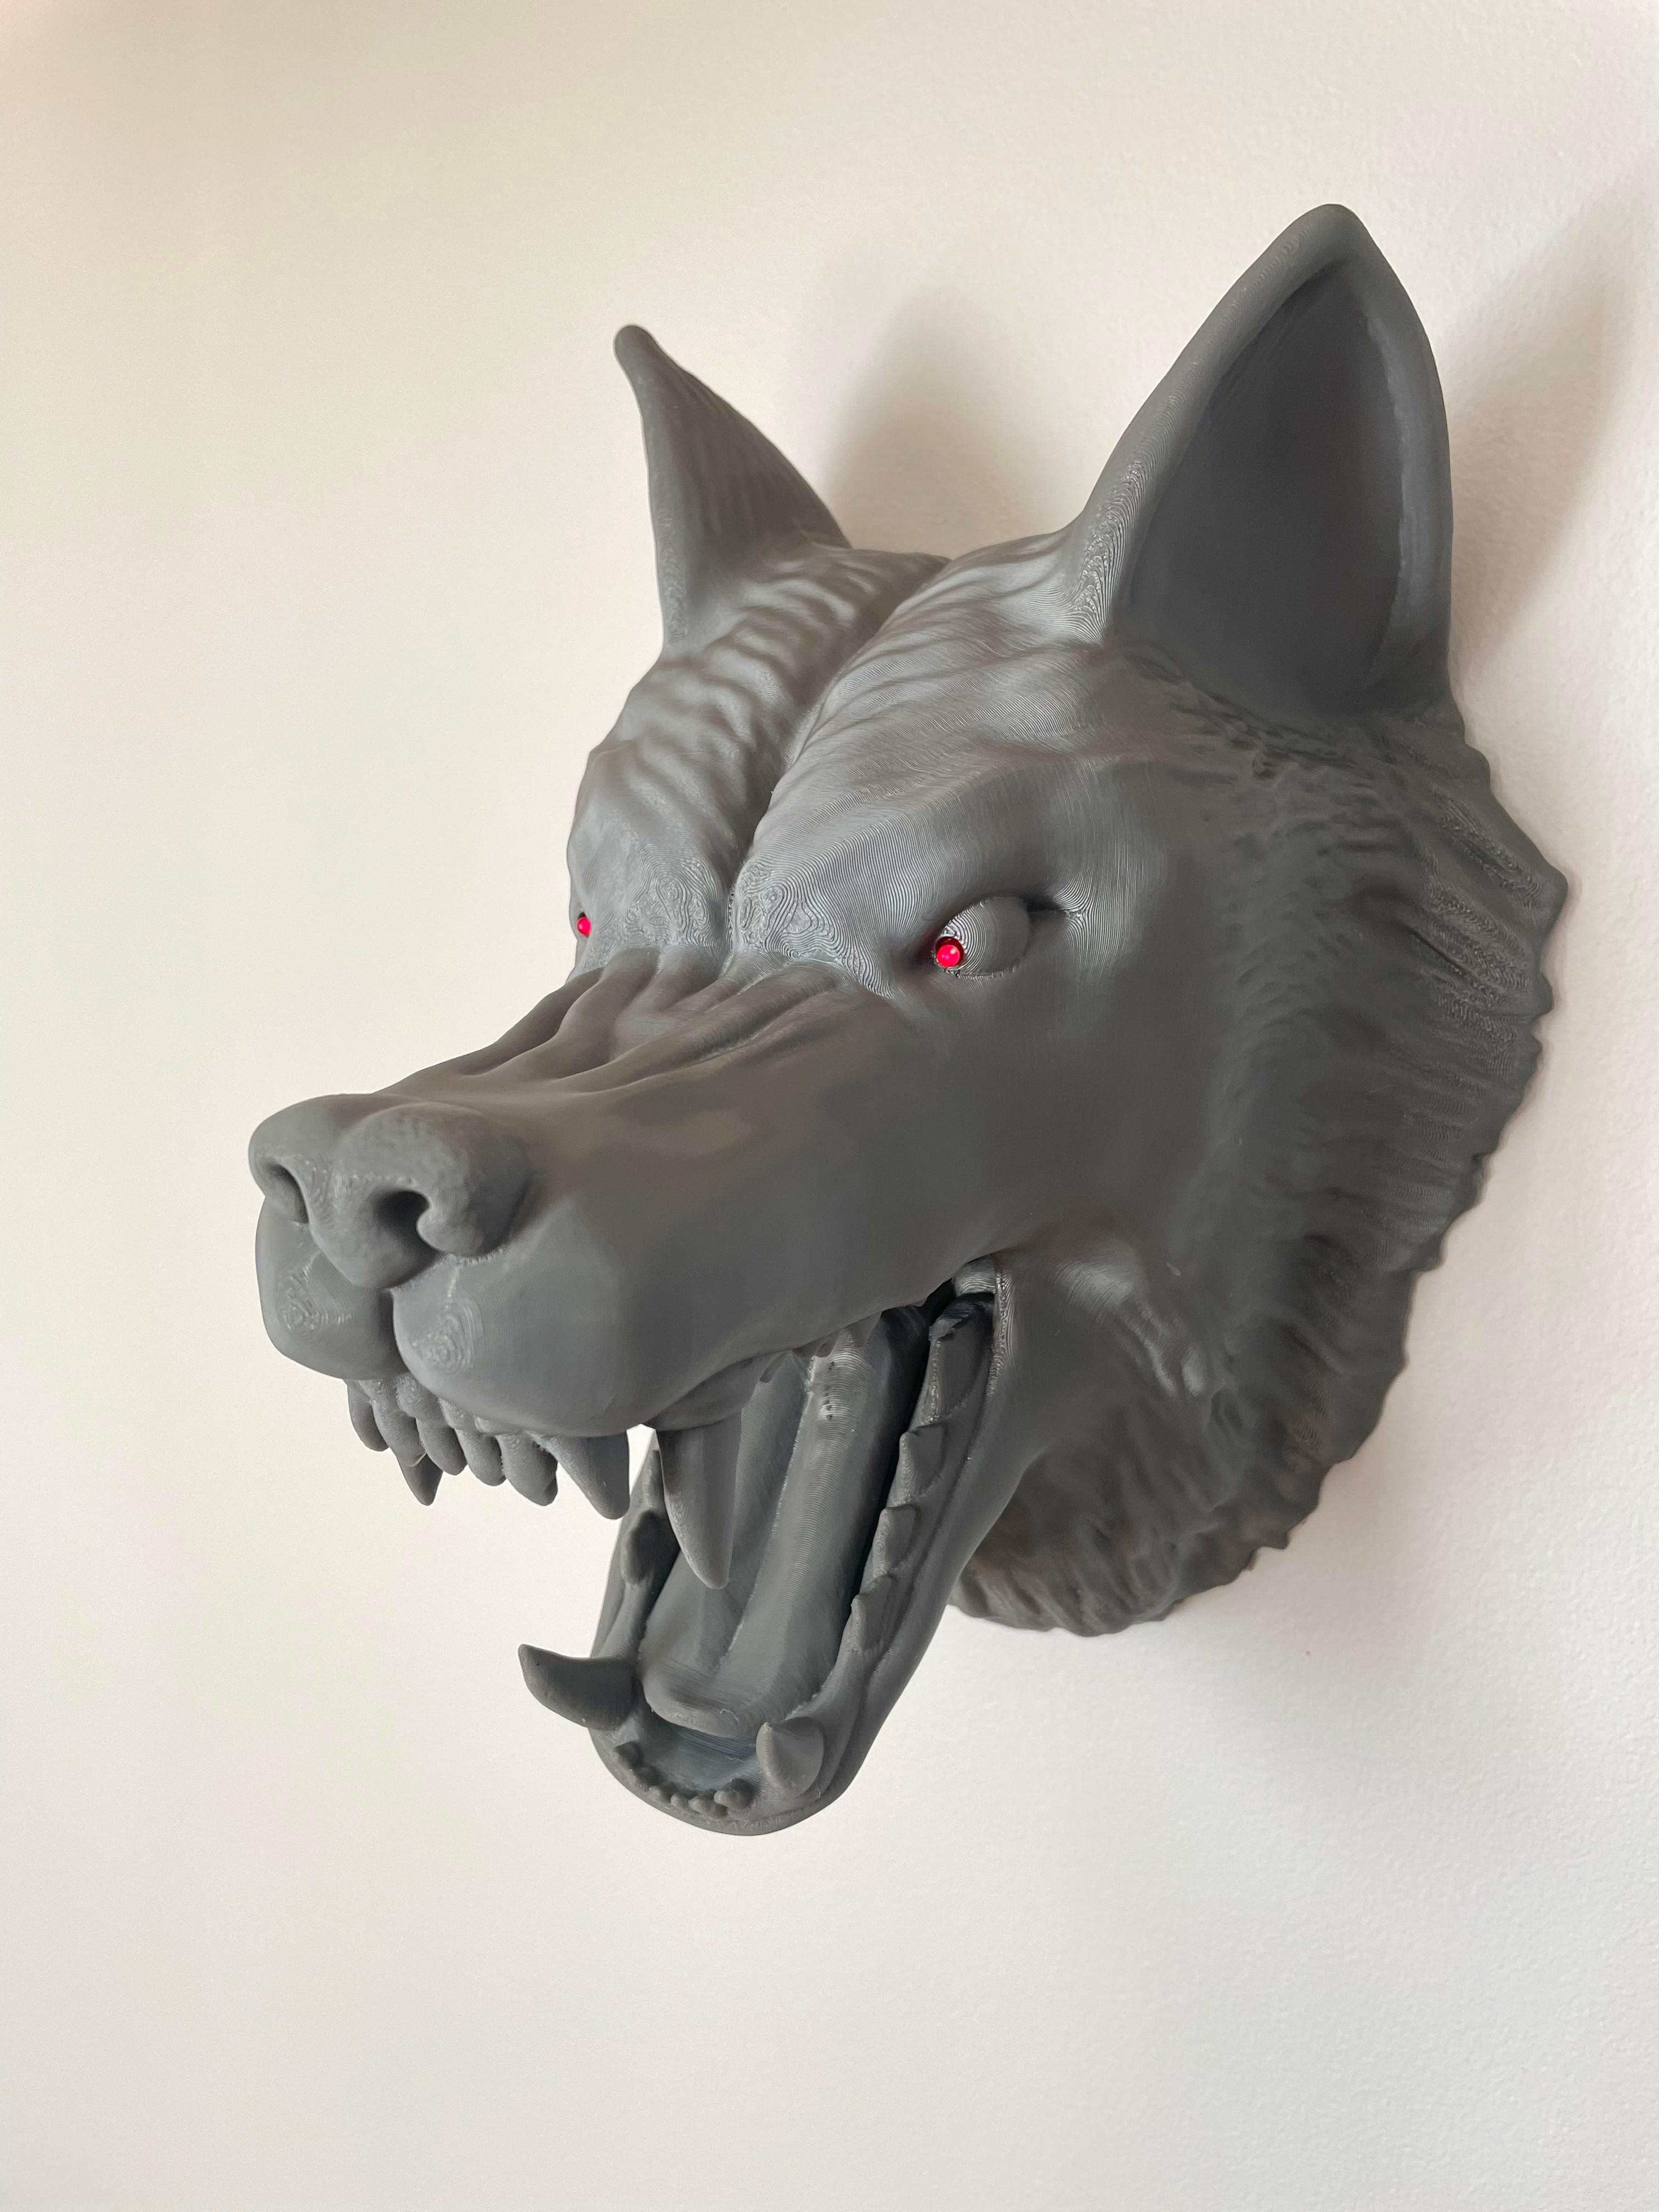 Wolf Head Wall Mounted / Headset Holder 3d model